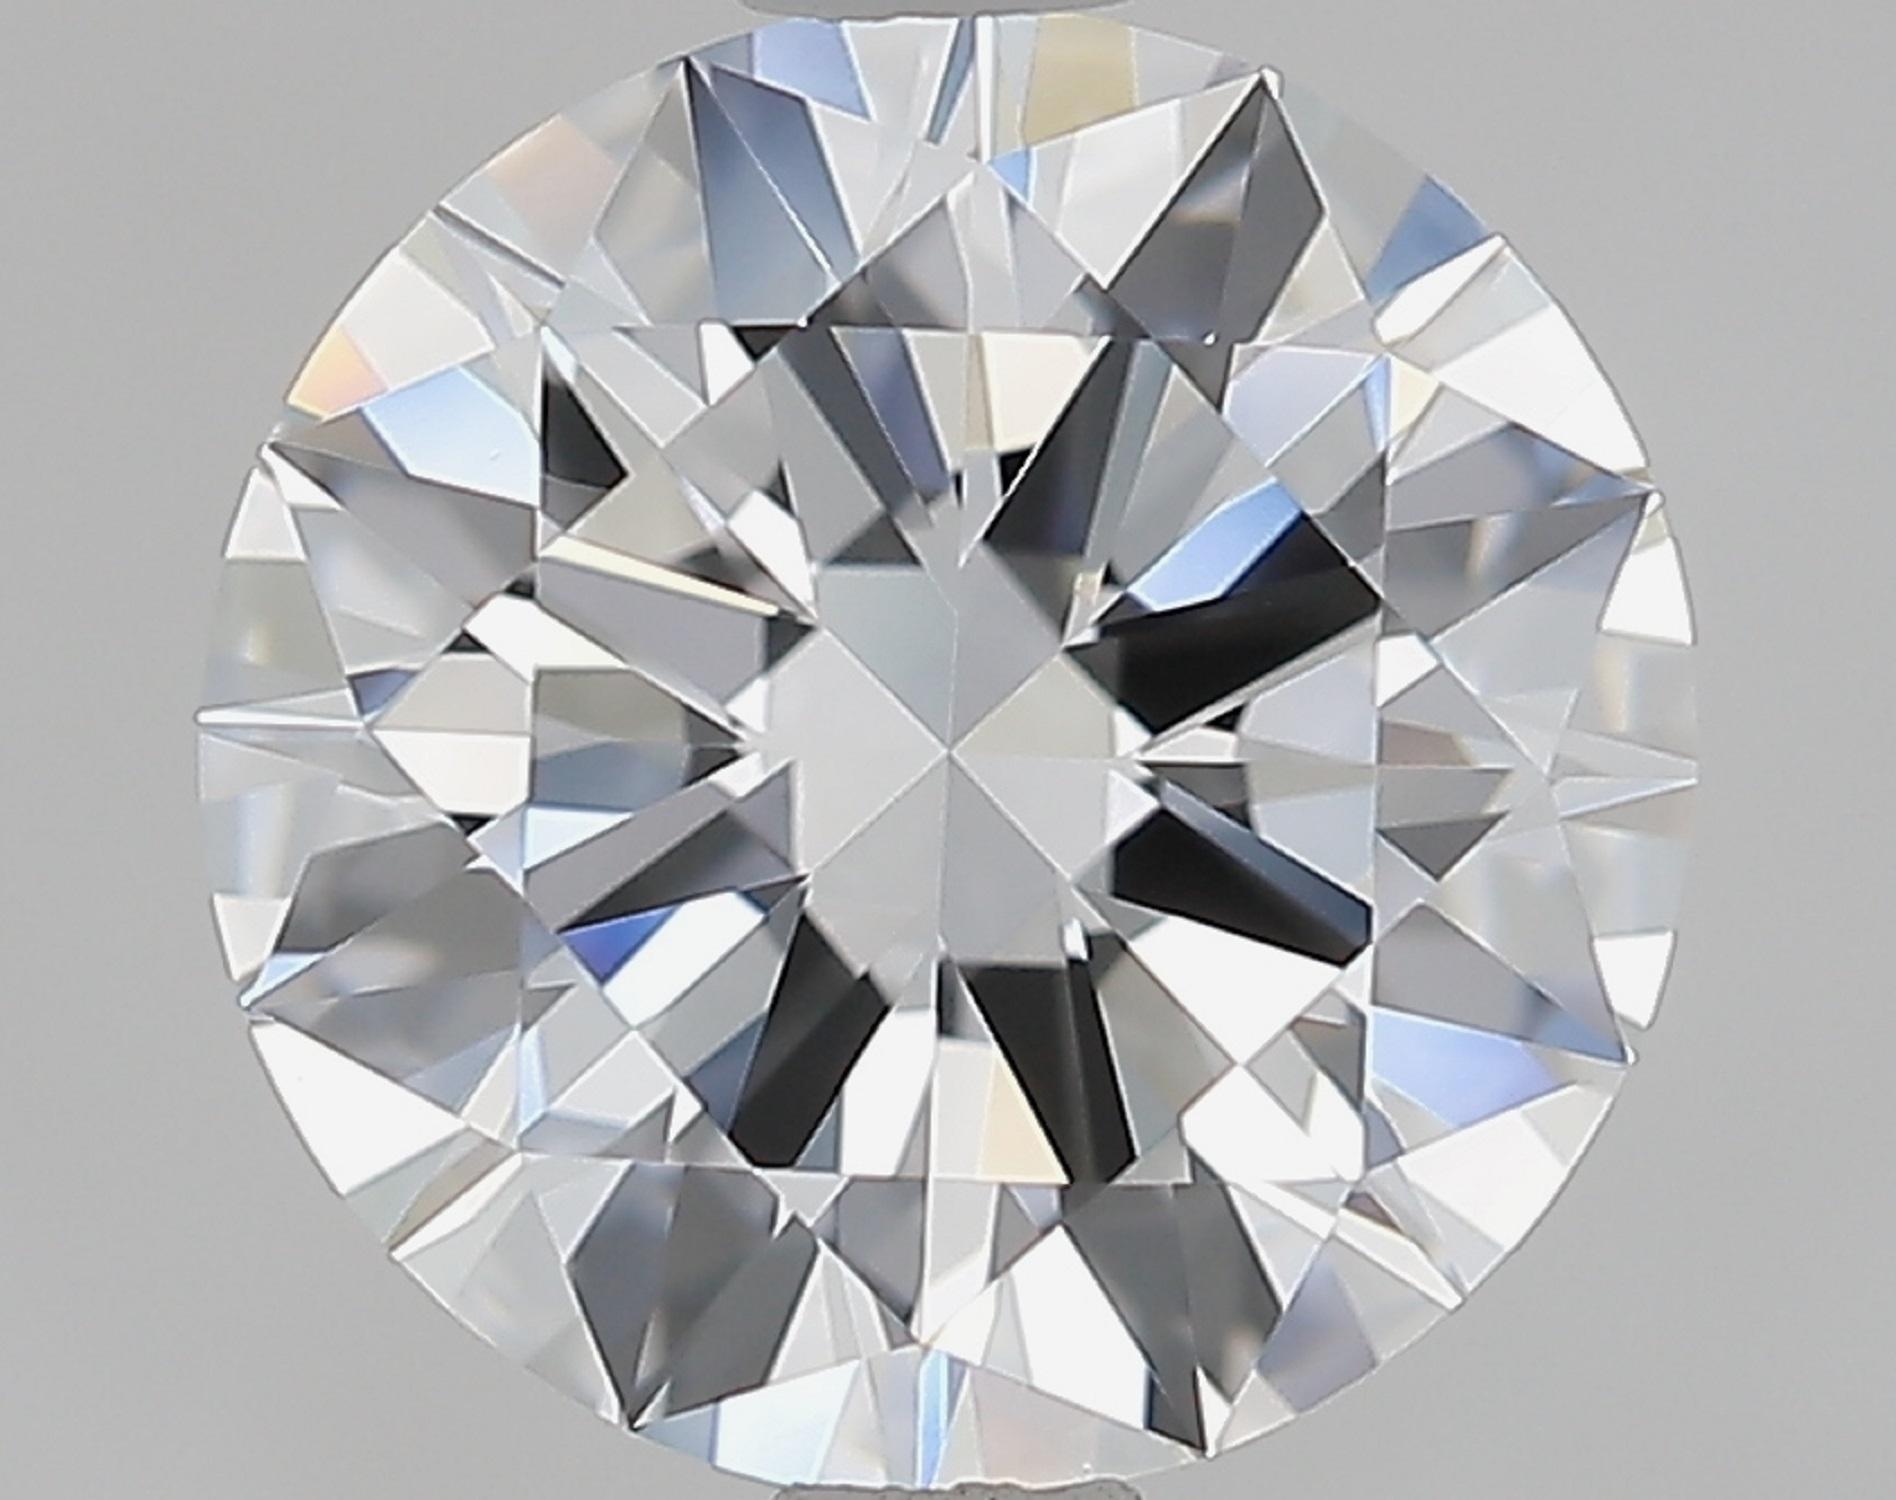 3.02 carat diamond earrings